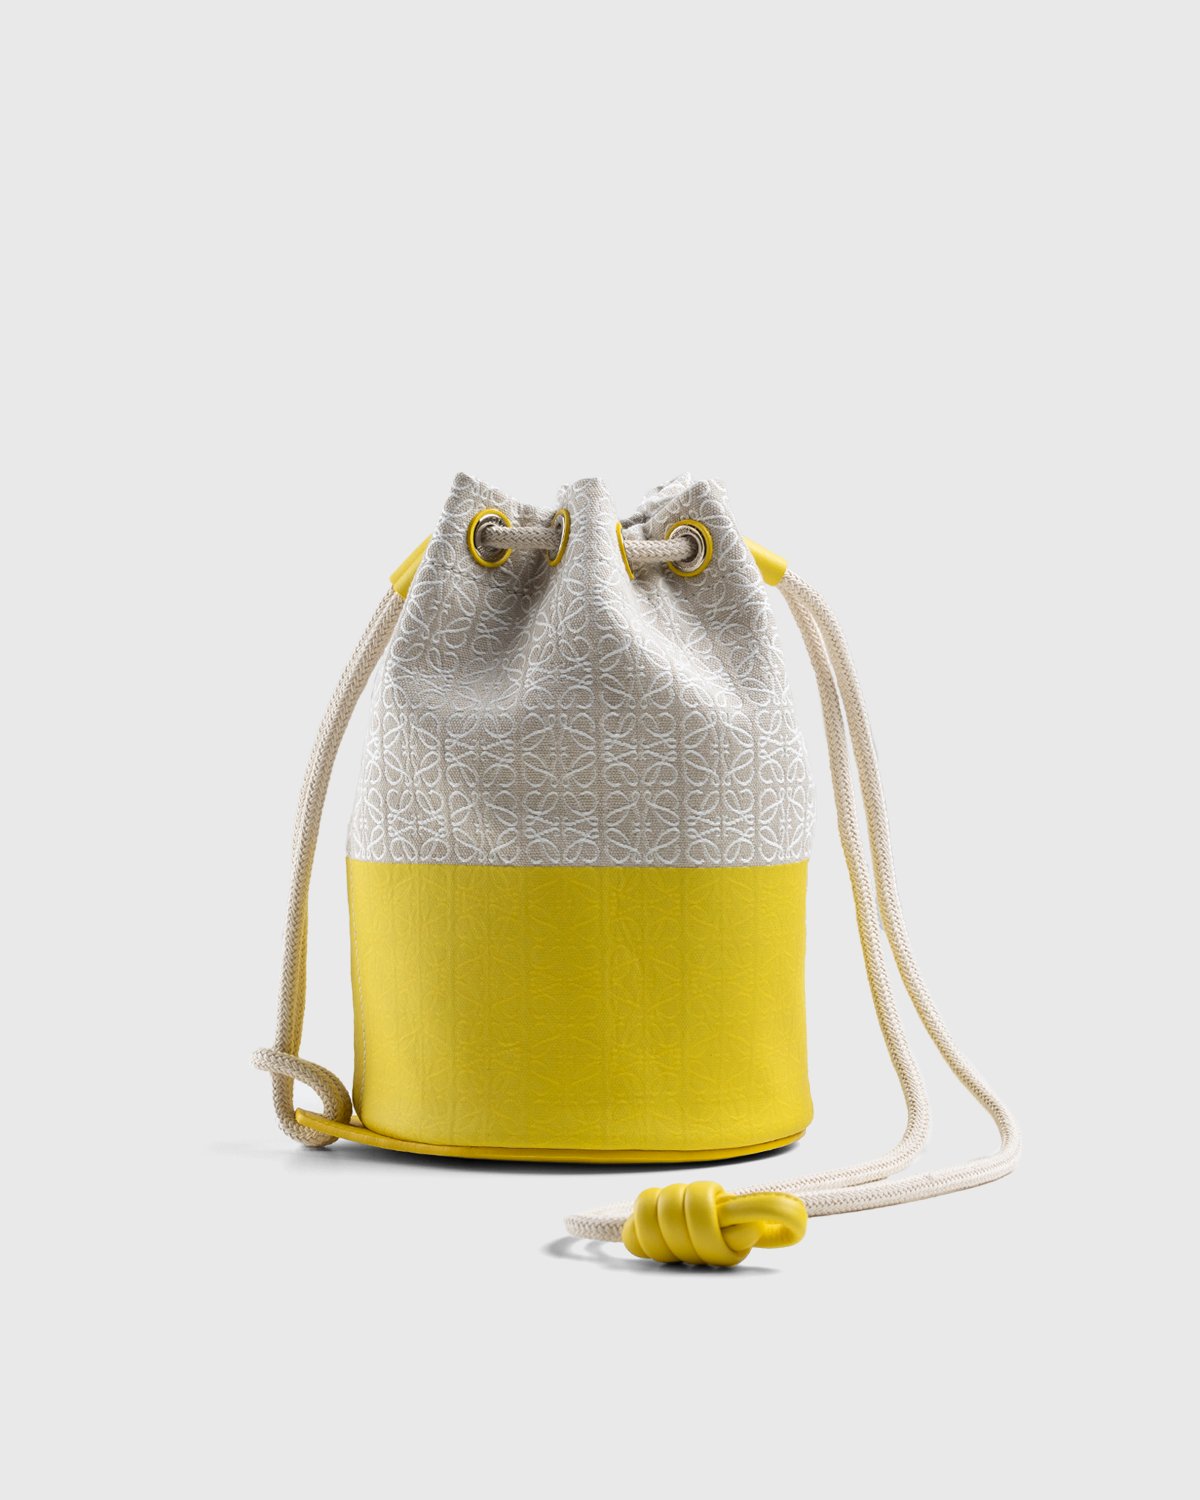 Loewe - Paula's Ibiza Small Sailor Bag Ecru/Lemon - Accessories - Yellow - Image 2